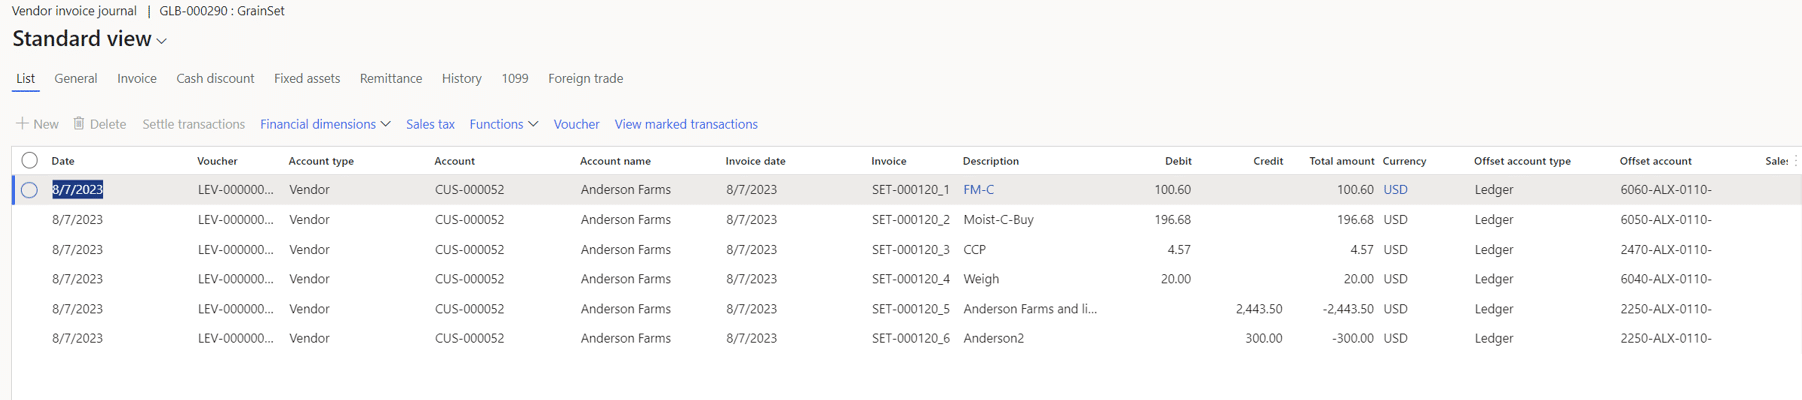 Screenshot of vendor invoice journal rows